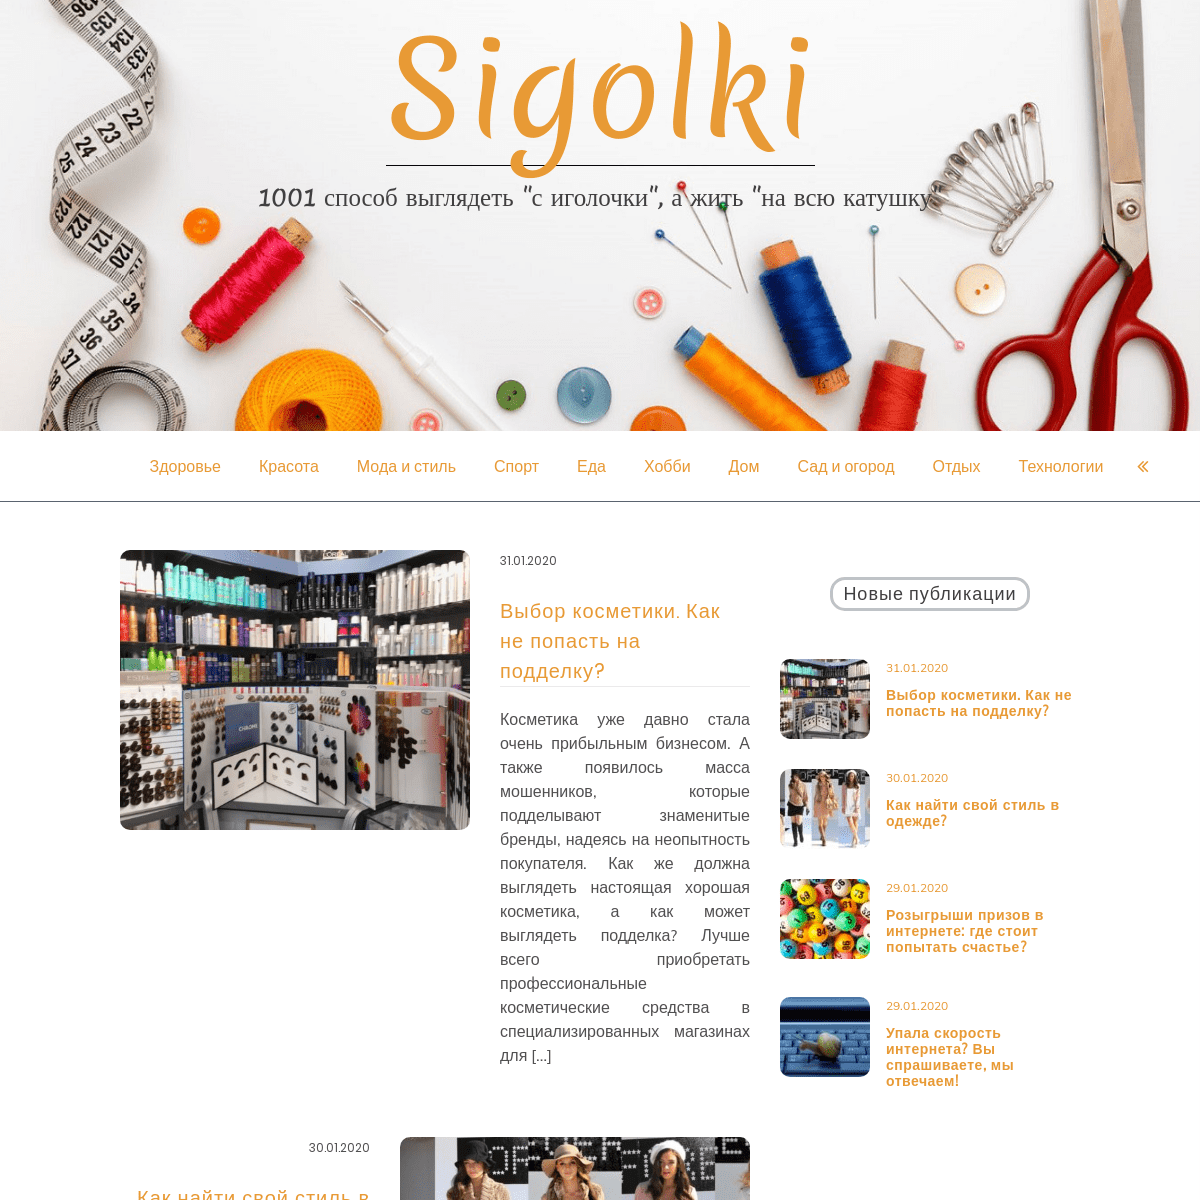 A complete backup of sigolki.com